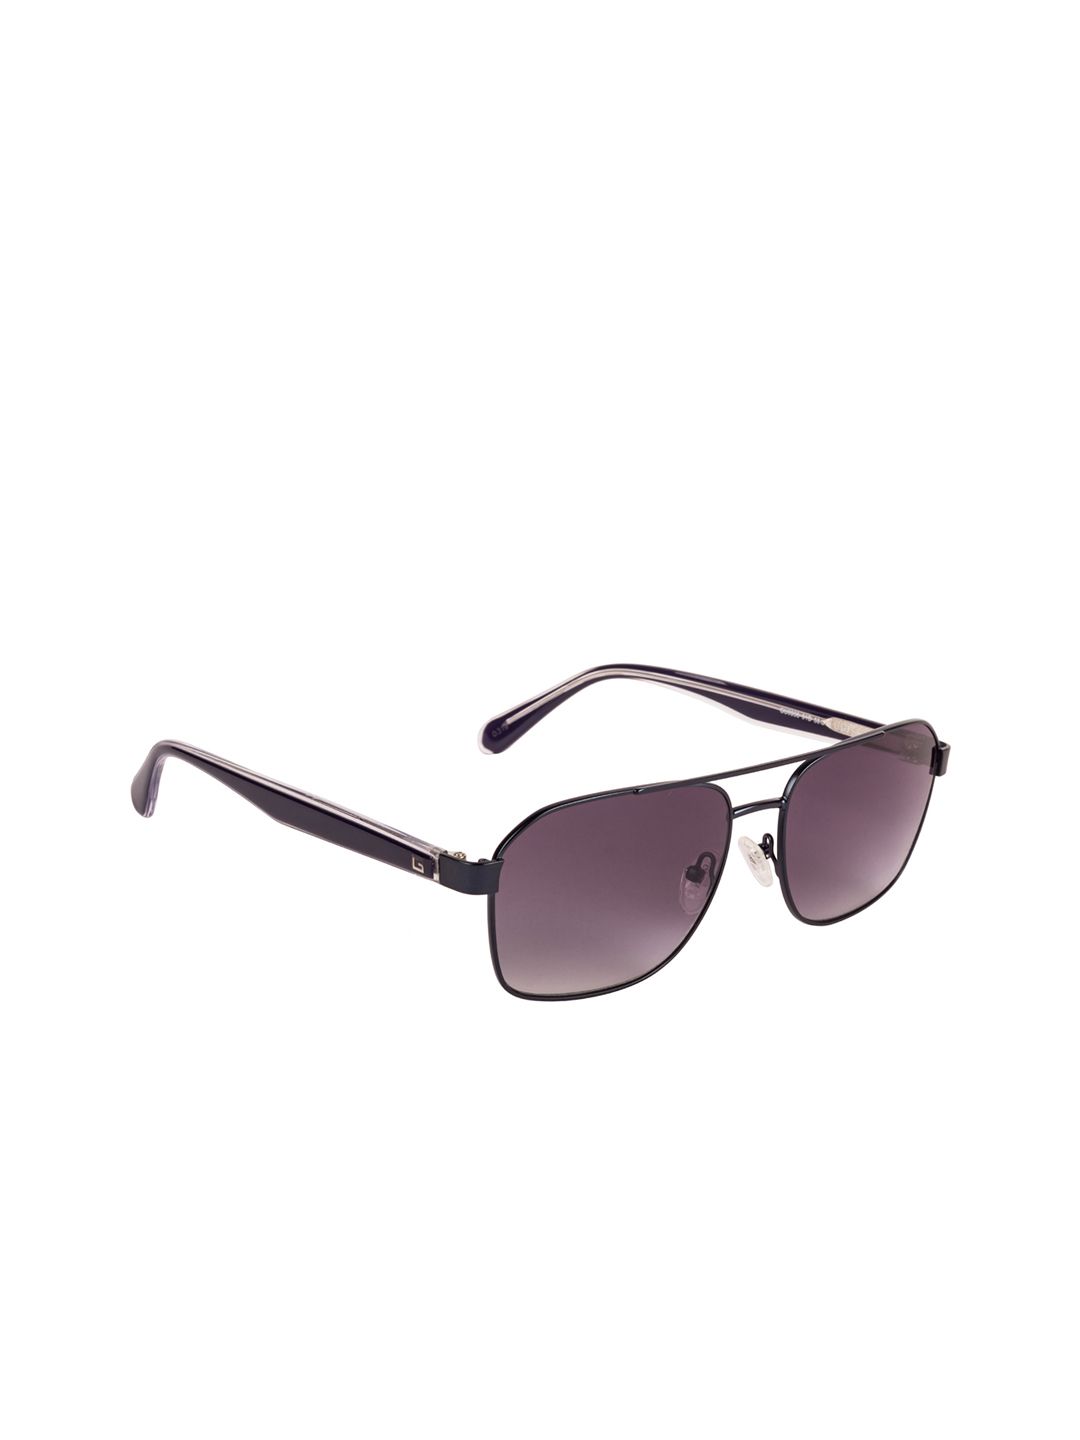 GUESS Women Rectangle Sunglasses GU6936 58 91B Price in India